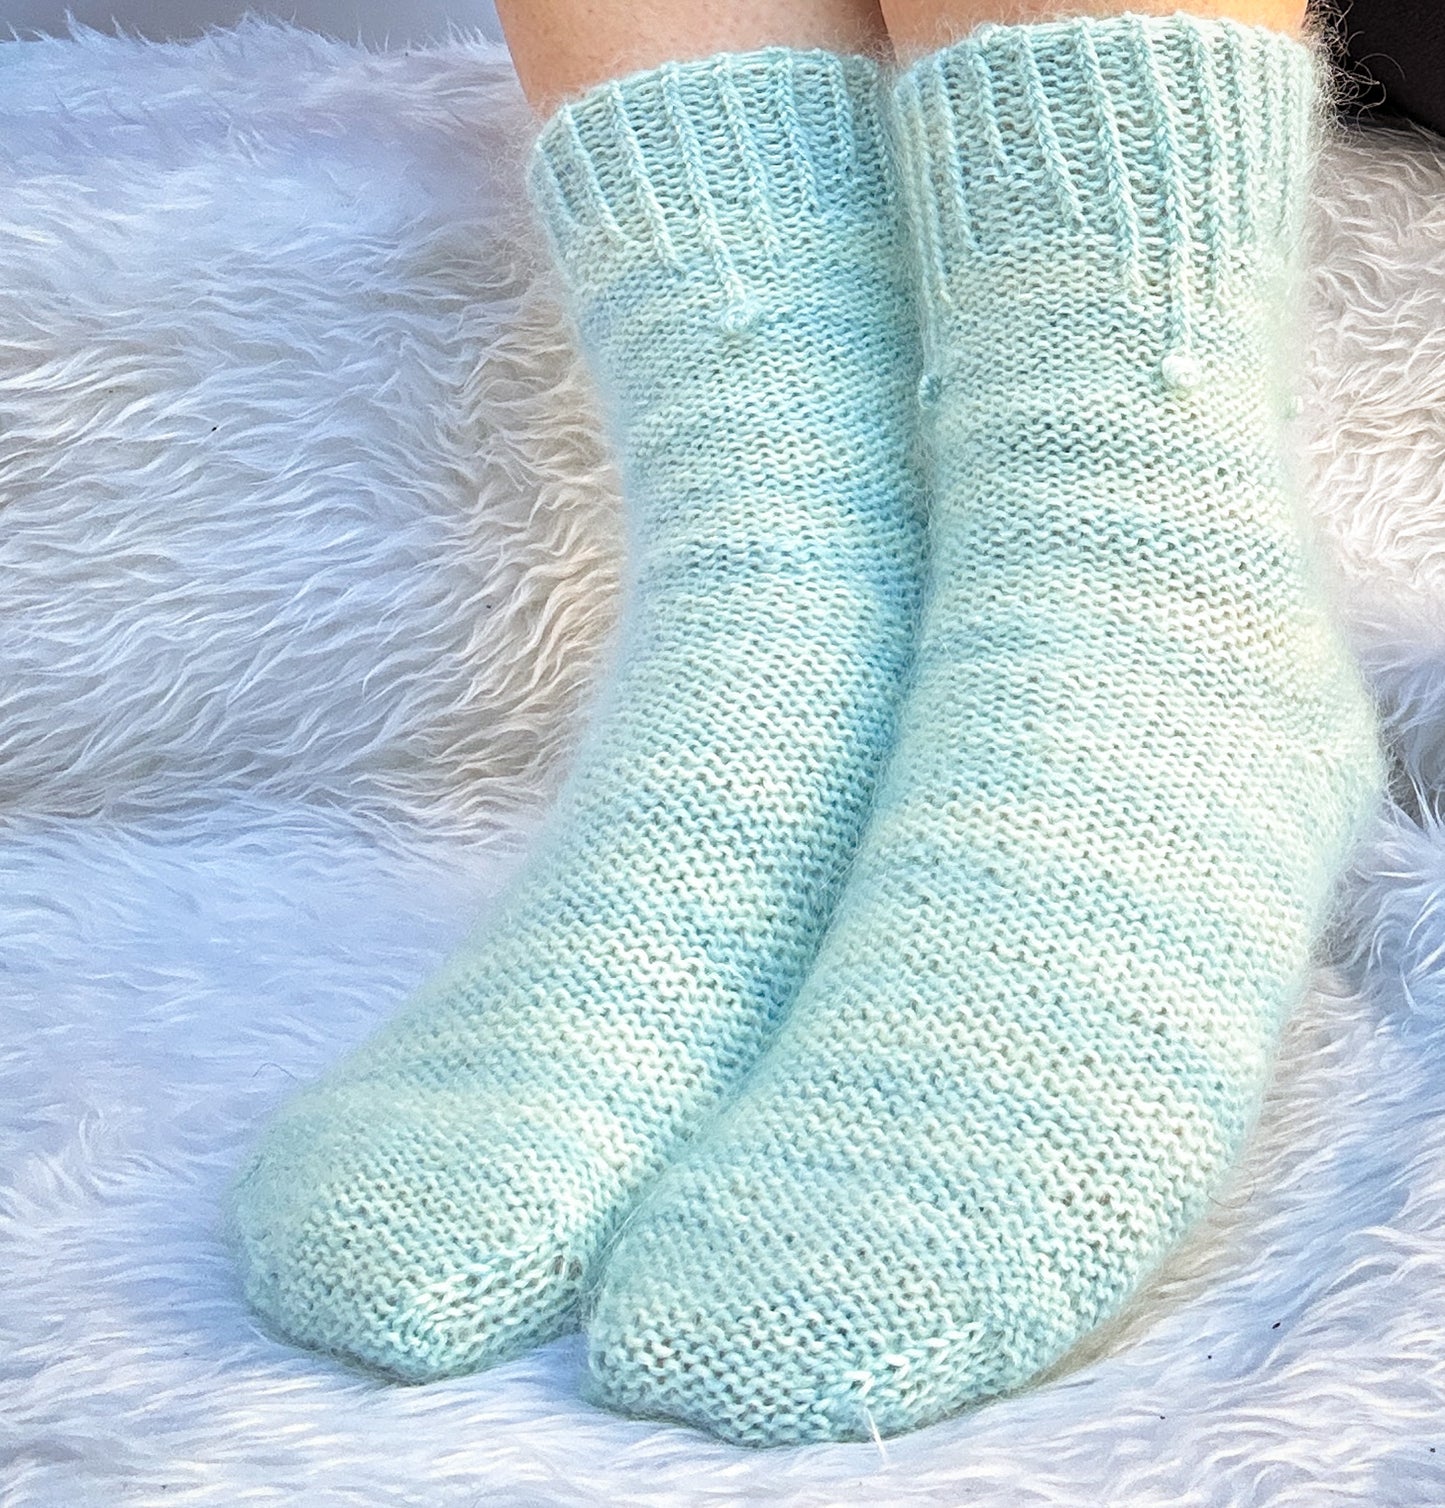 Snow Cone Socks (Part of Vanilla Sundae Sock Set)